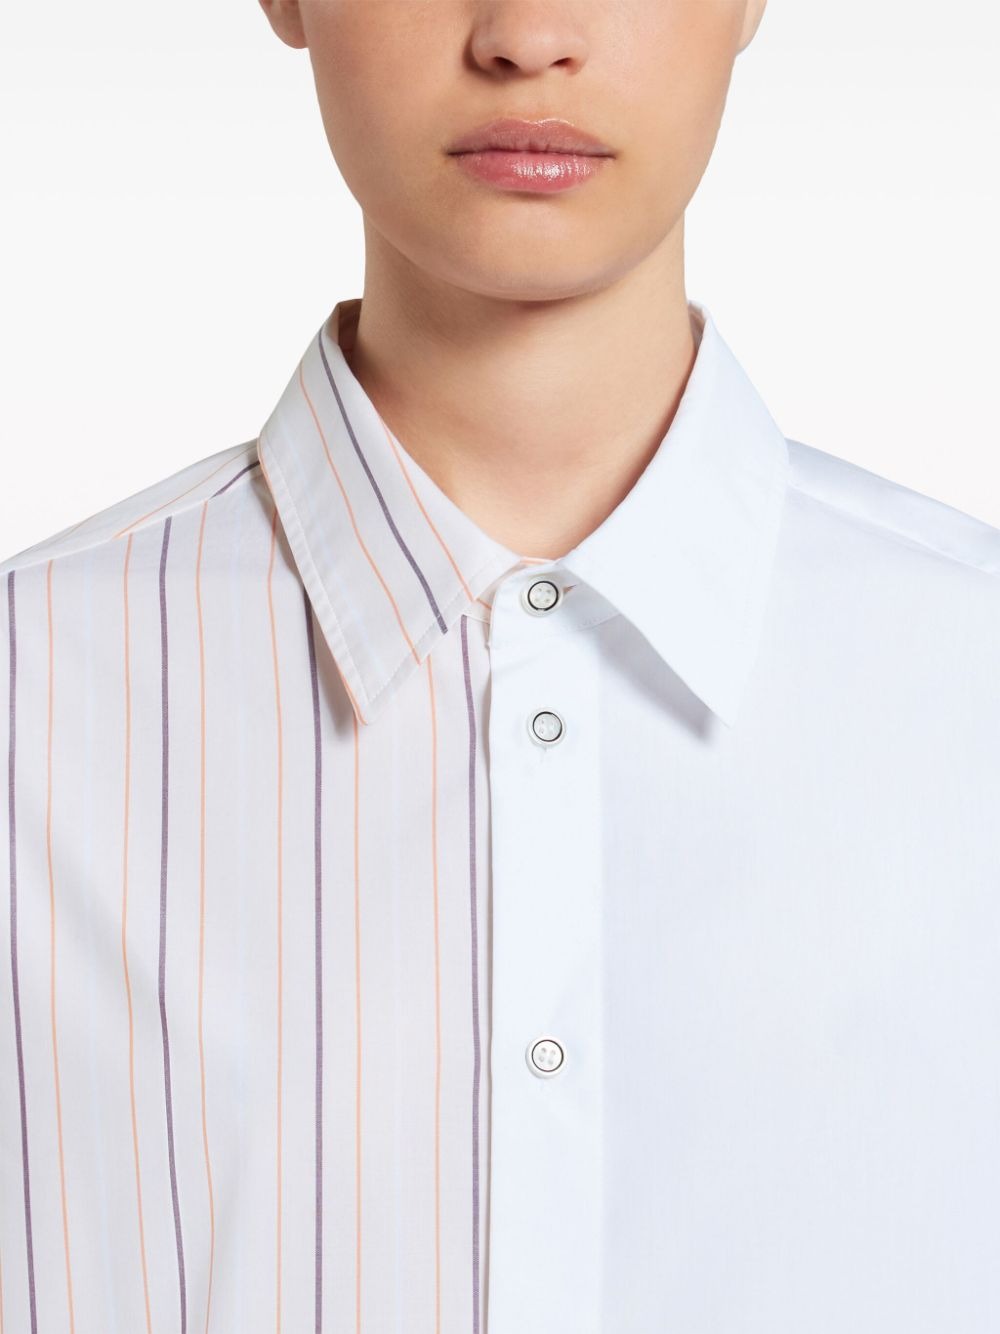 Marni Asymmetric Striped Pattern Shirt in Ivory